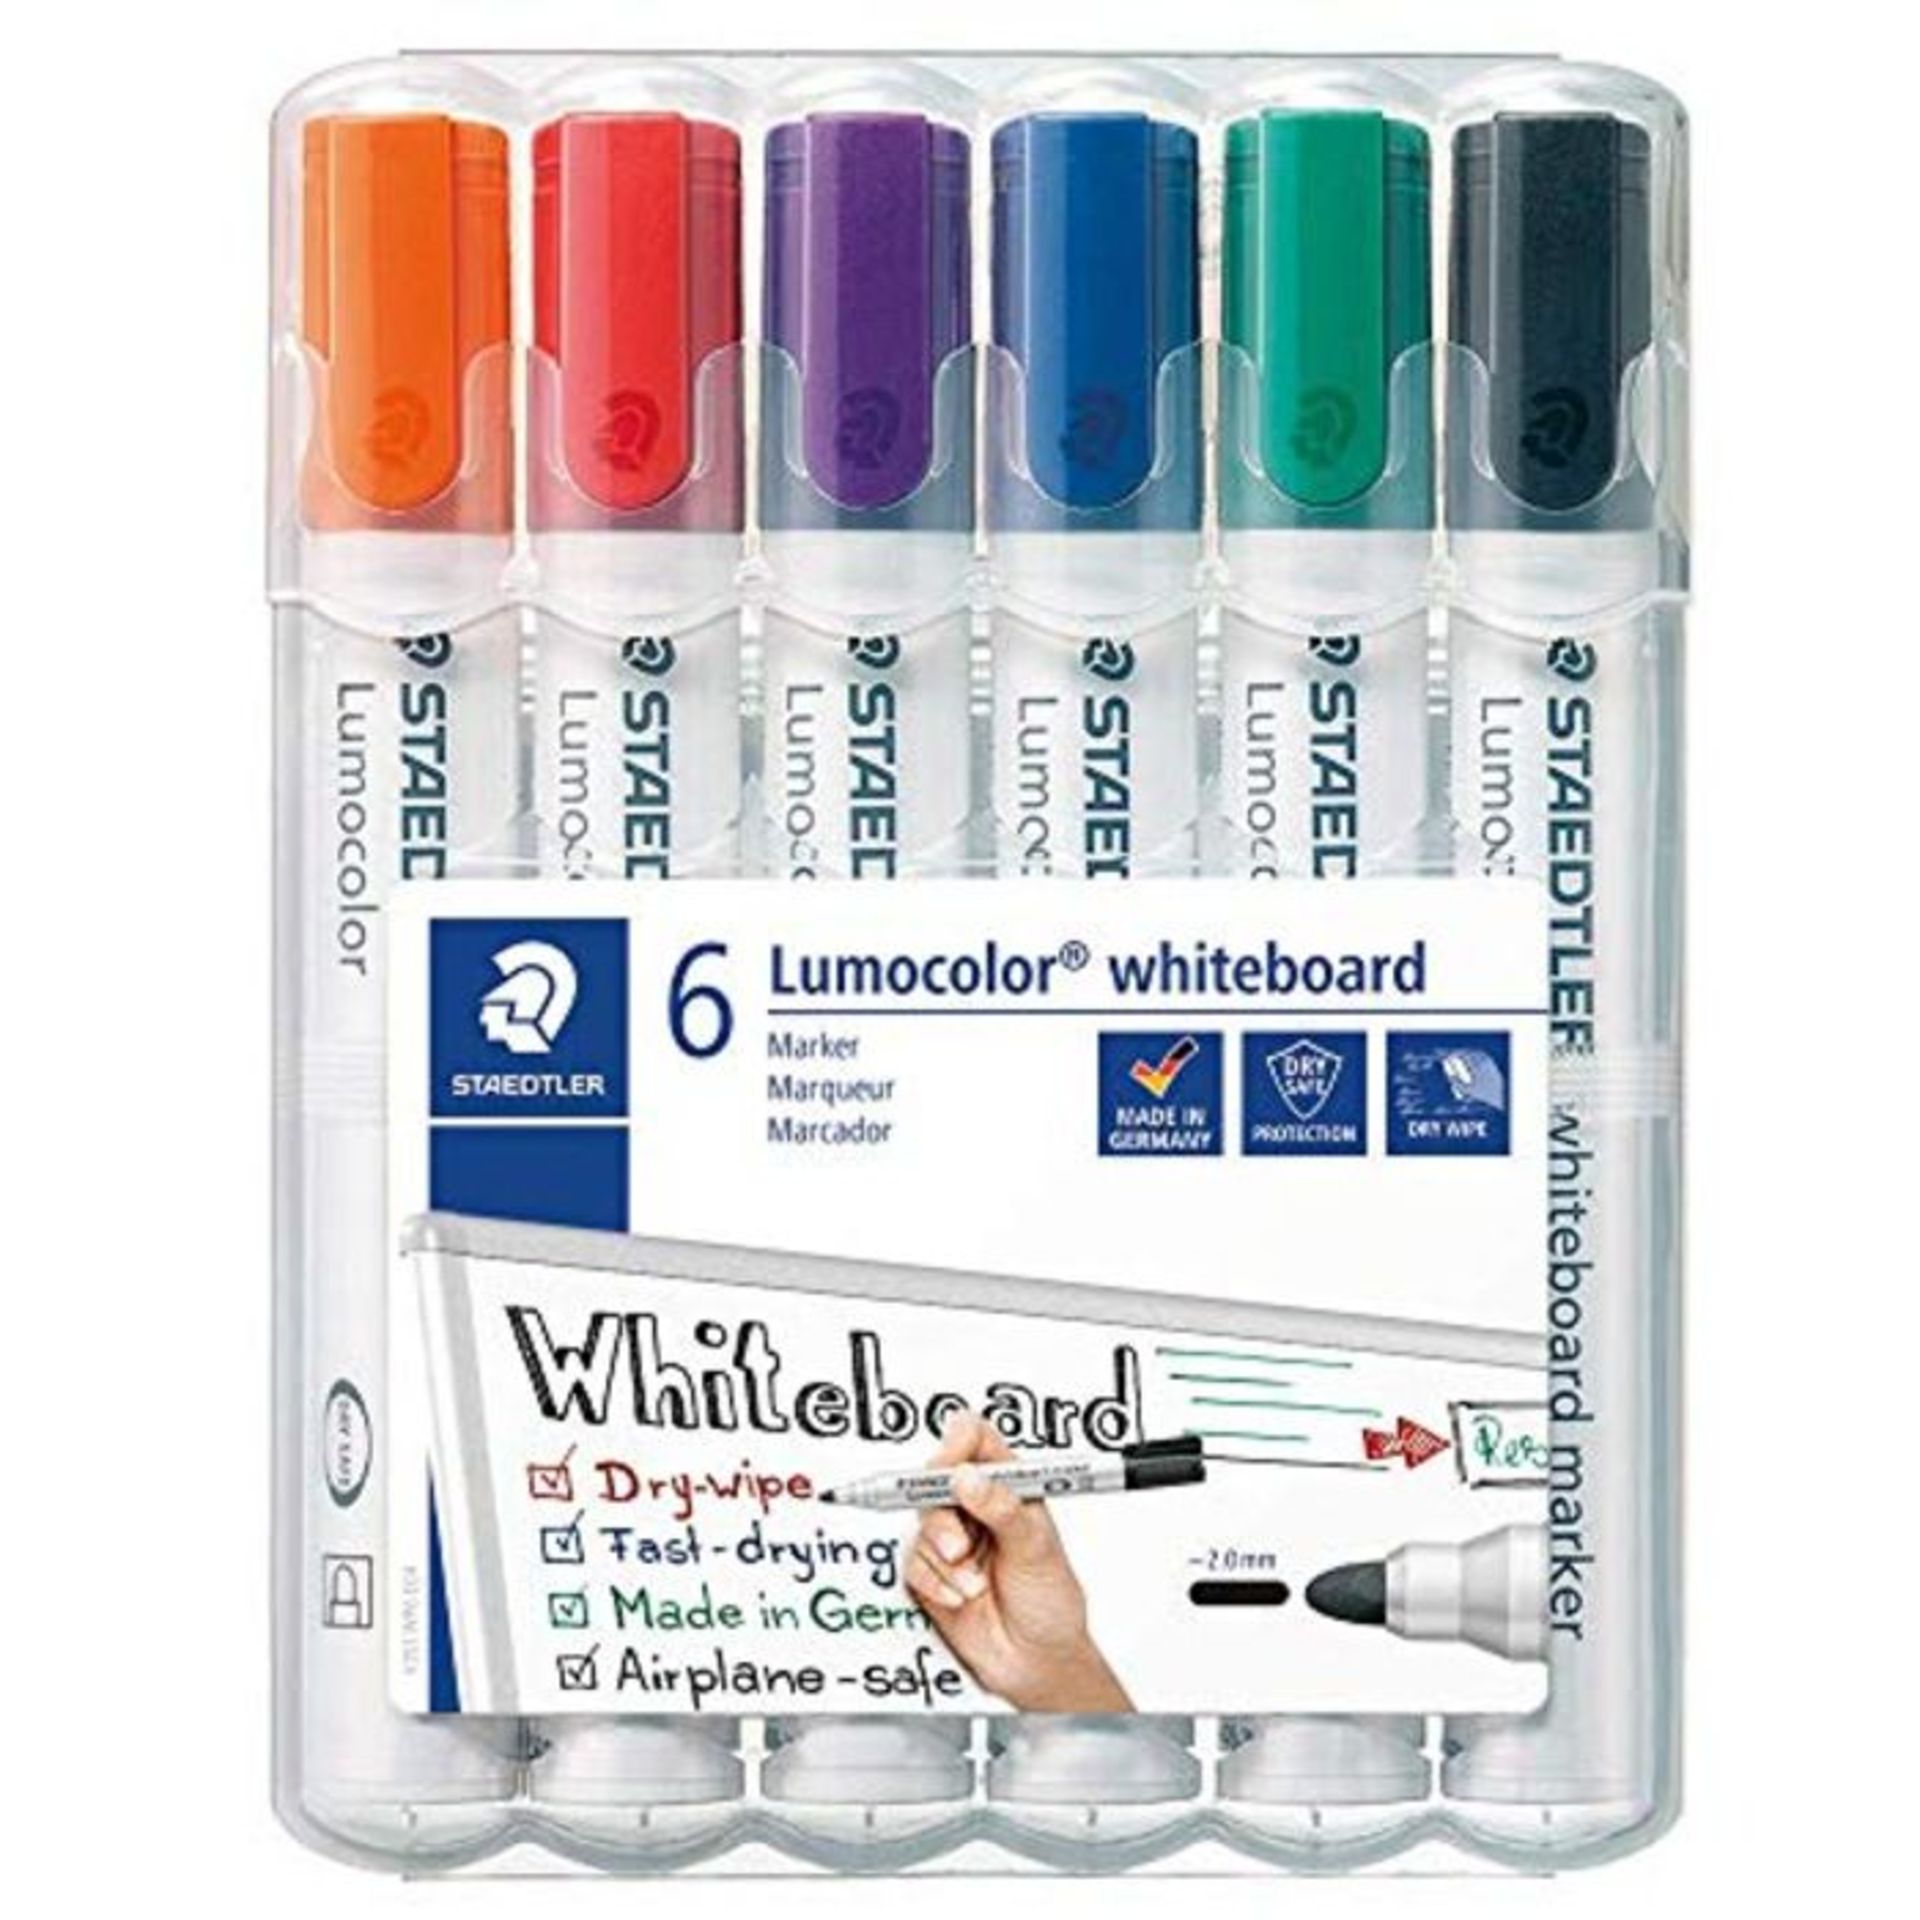 STAEDTLER 351WP6 Lumocolour Whiteboard Marker with Bullet Tip, Multicolor, Pack of 6